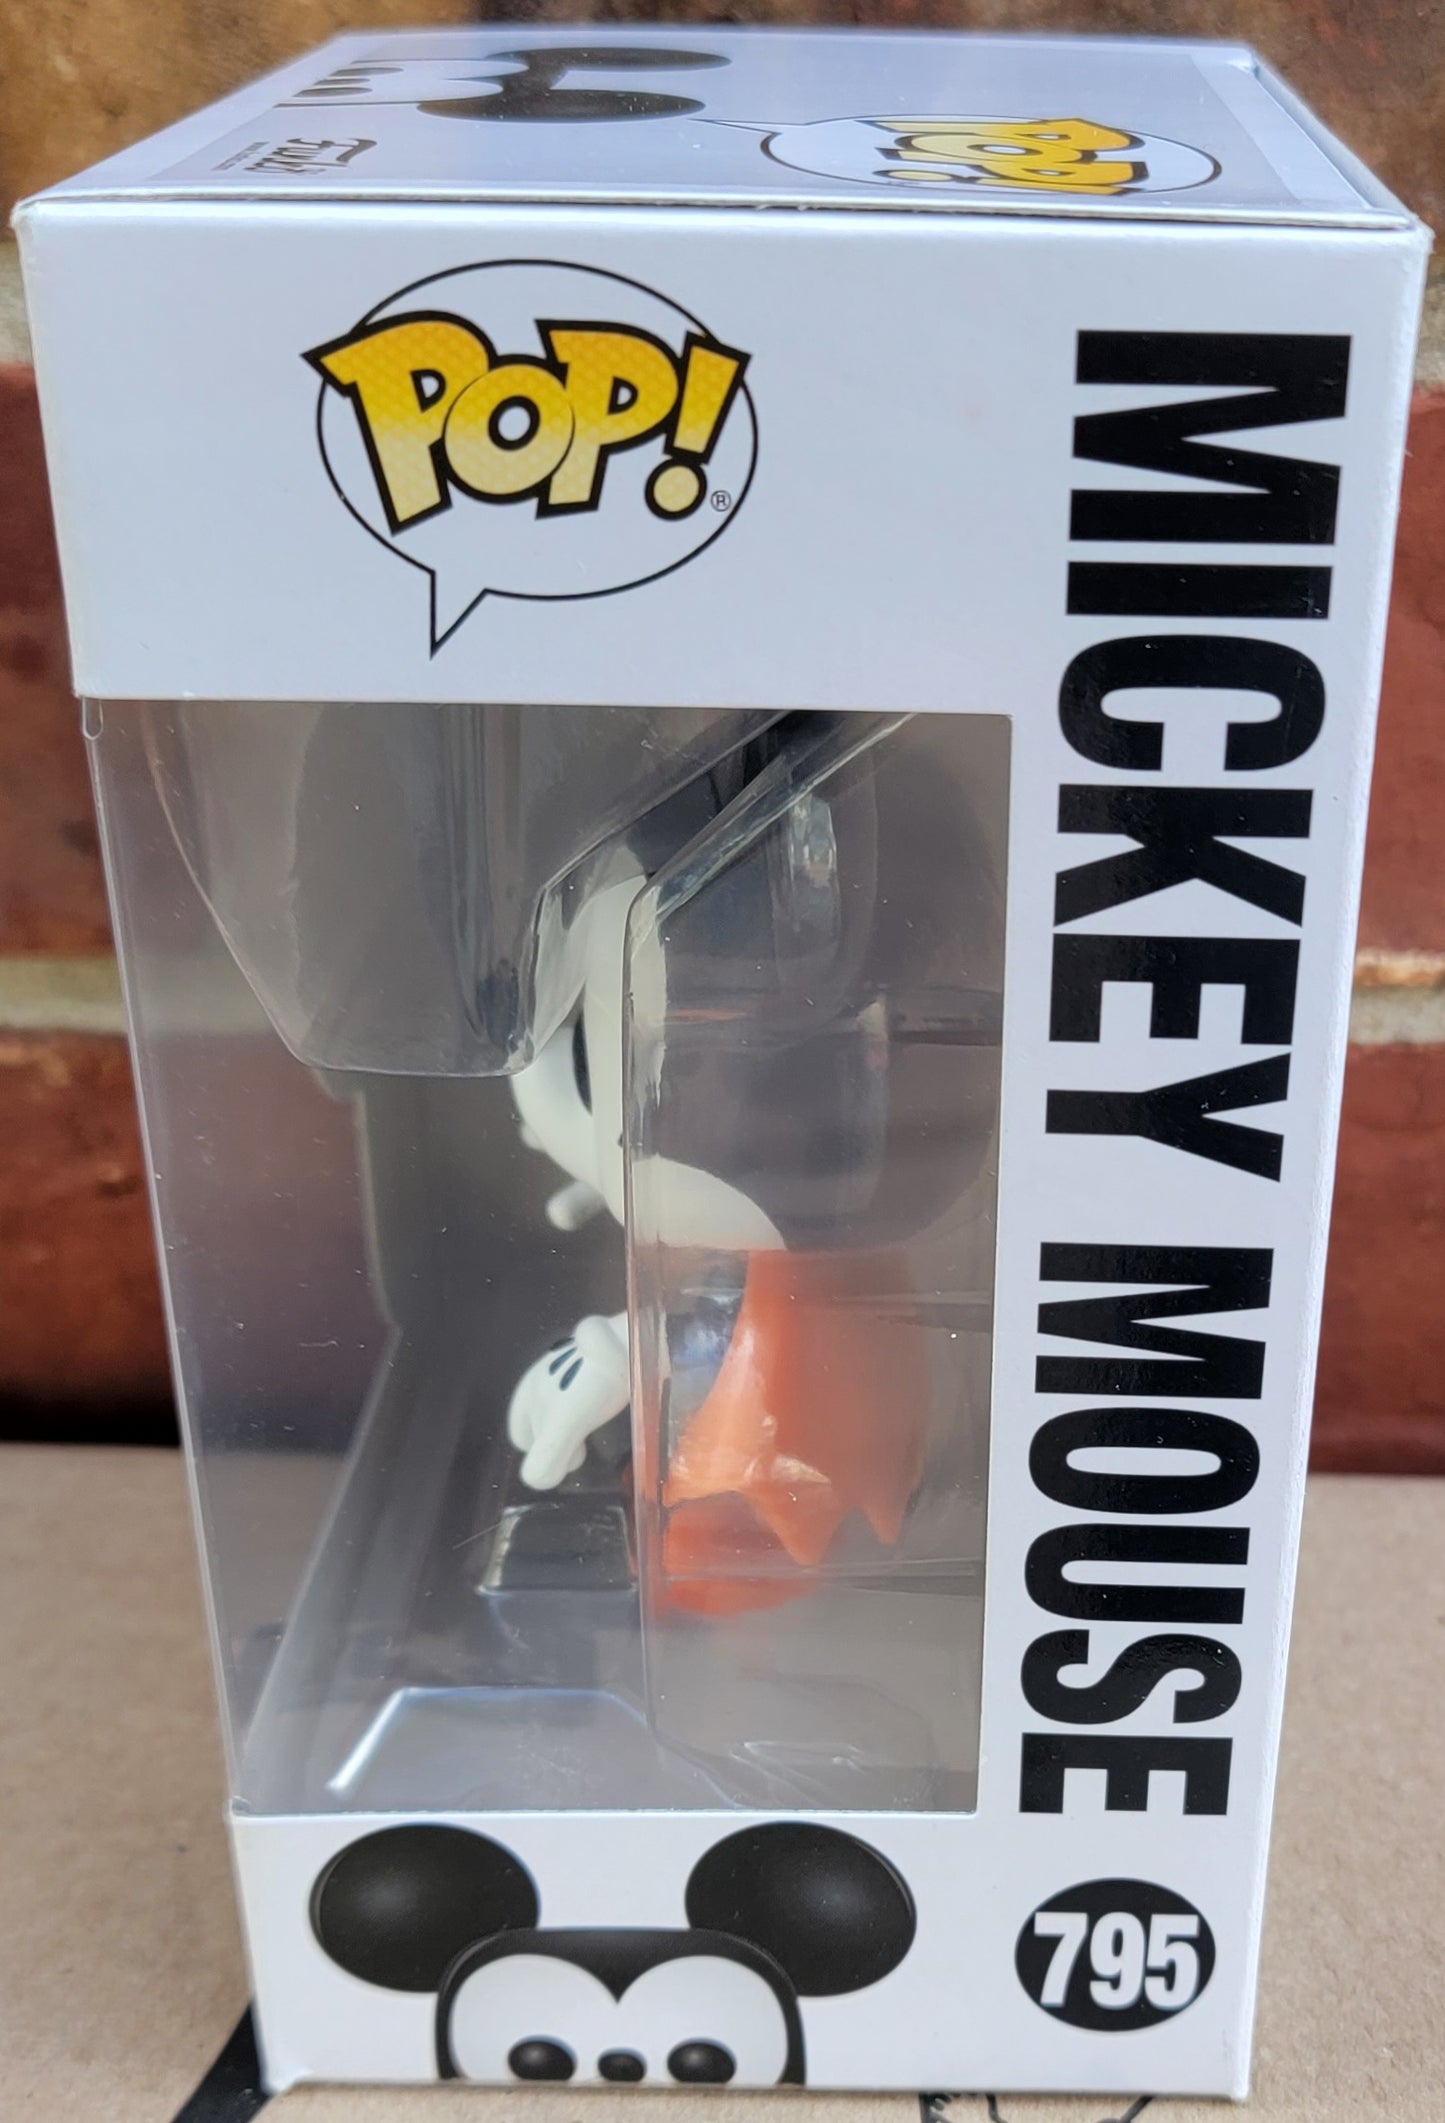 Mickey mouse funko # 795 (nib)